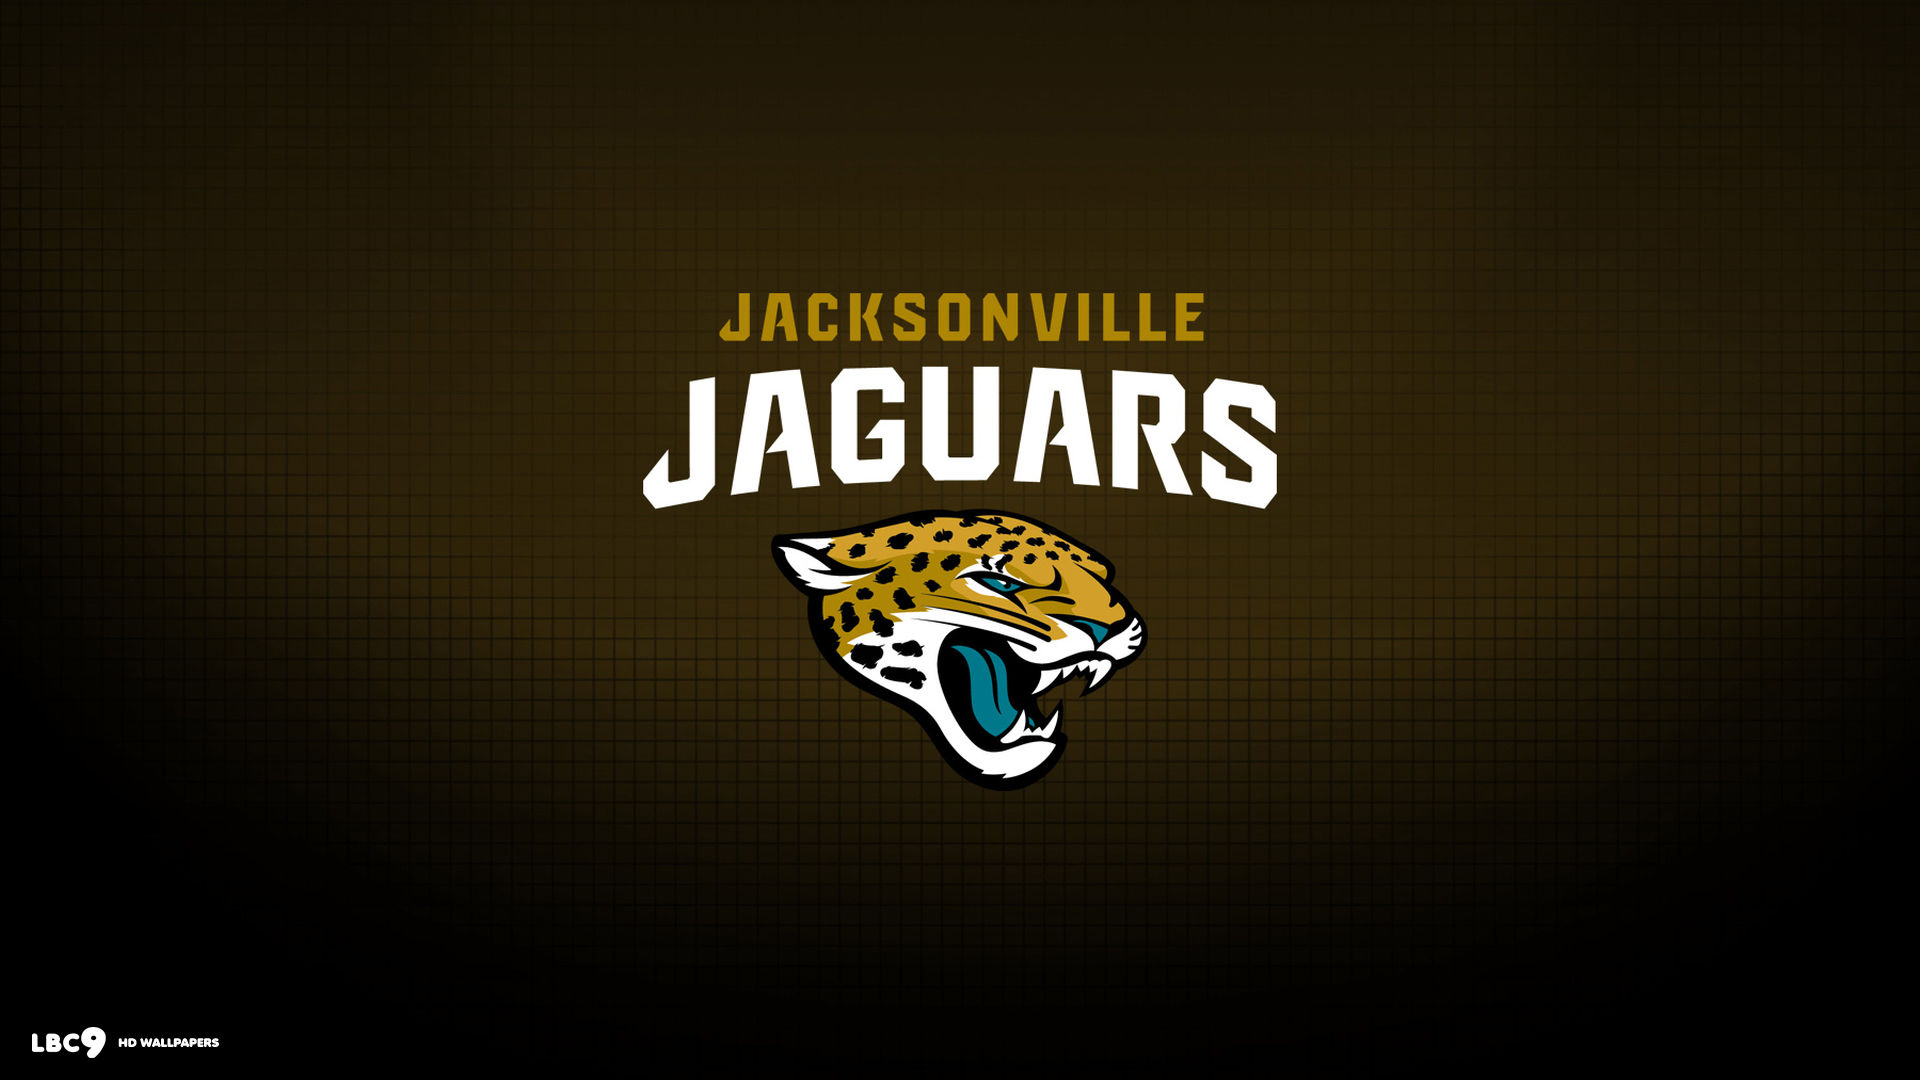 Jacksonville Jaguars wallpaper | 1920x1080 | #2821